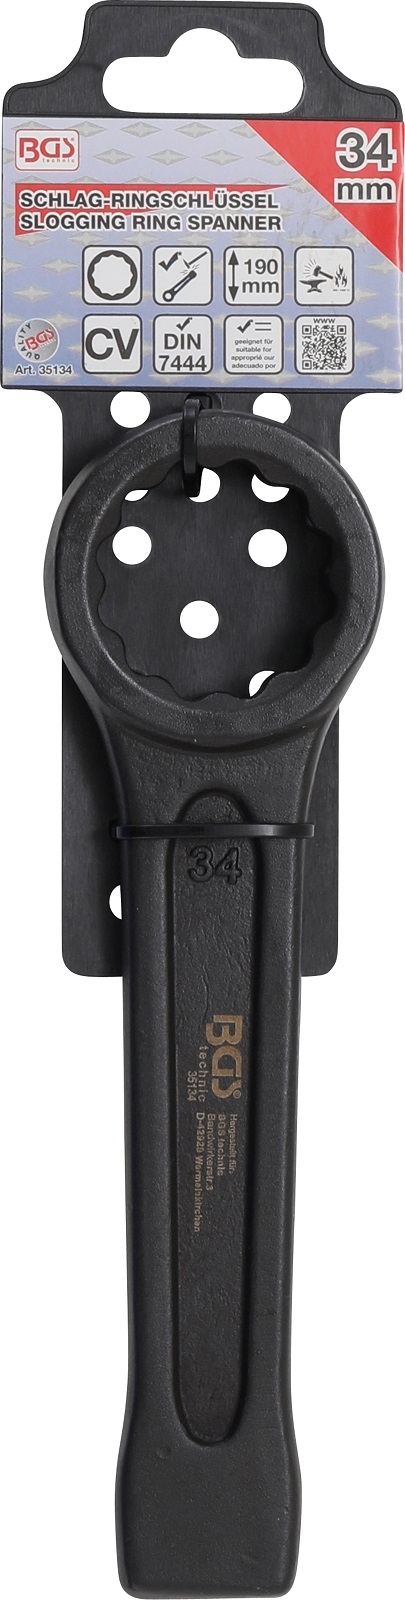 Schlag-Ringschlüssel | SW 34 mm - BGS 35134